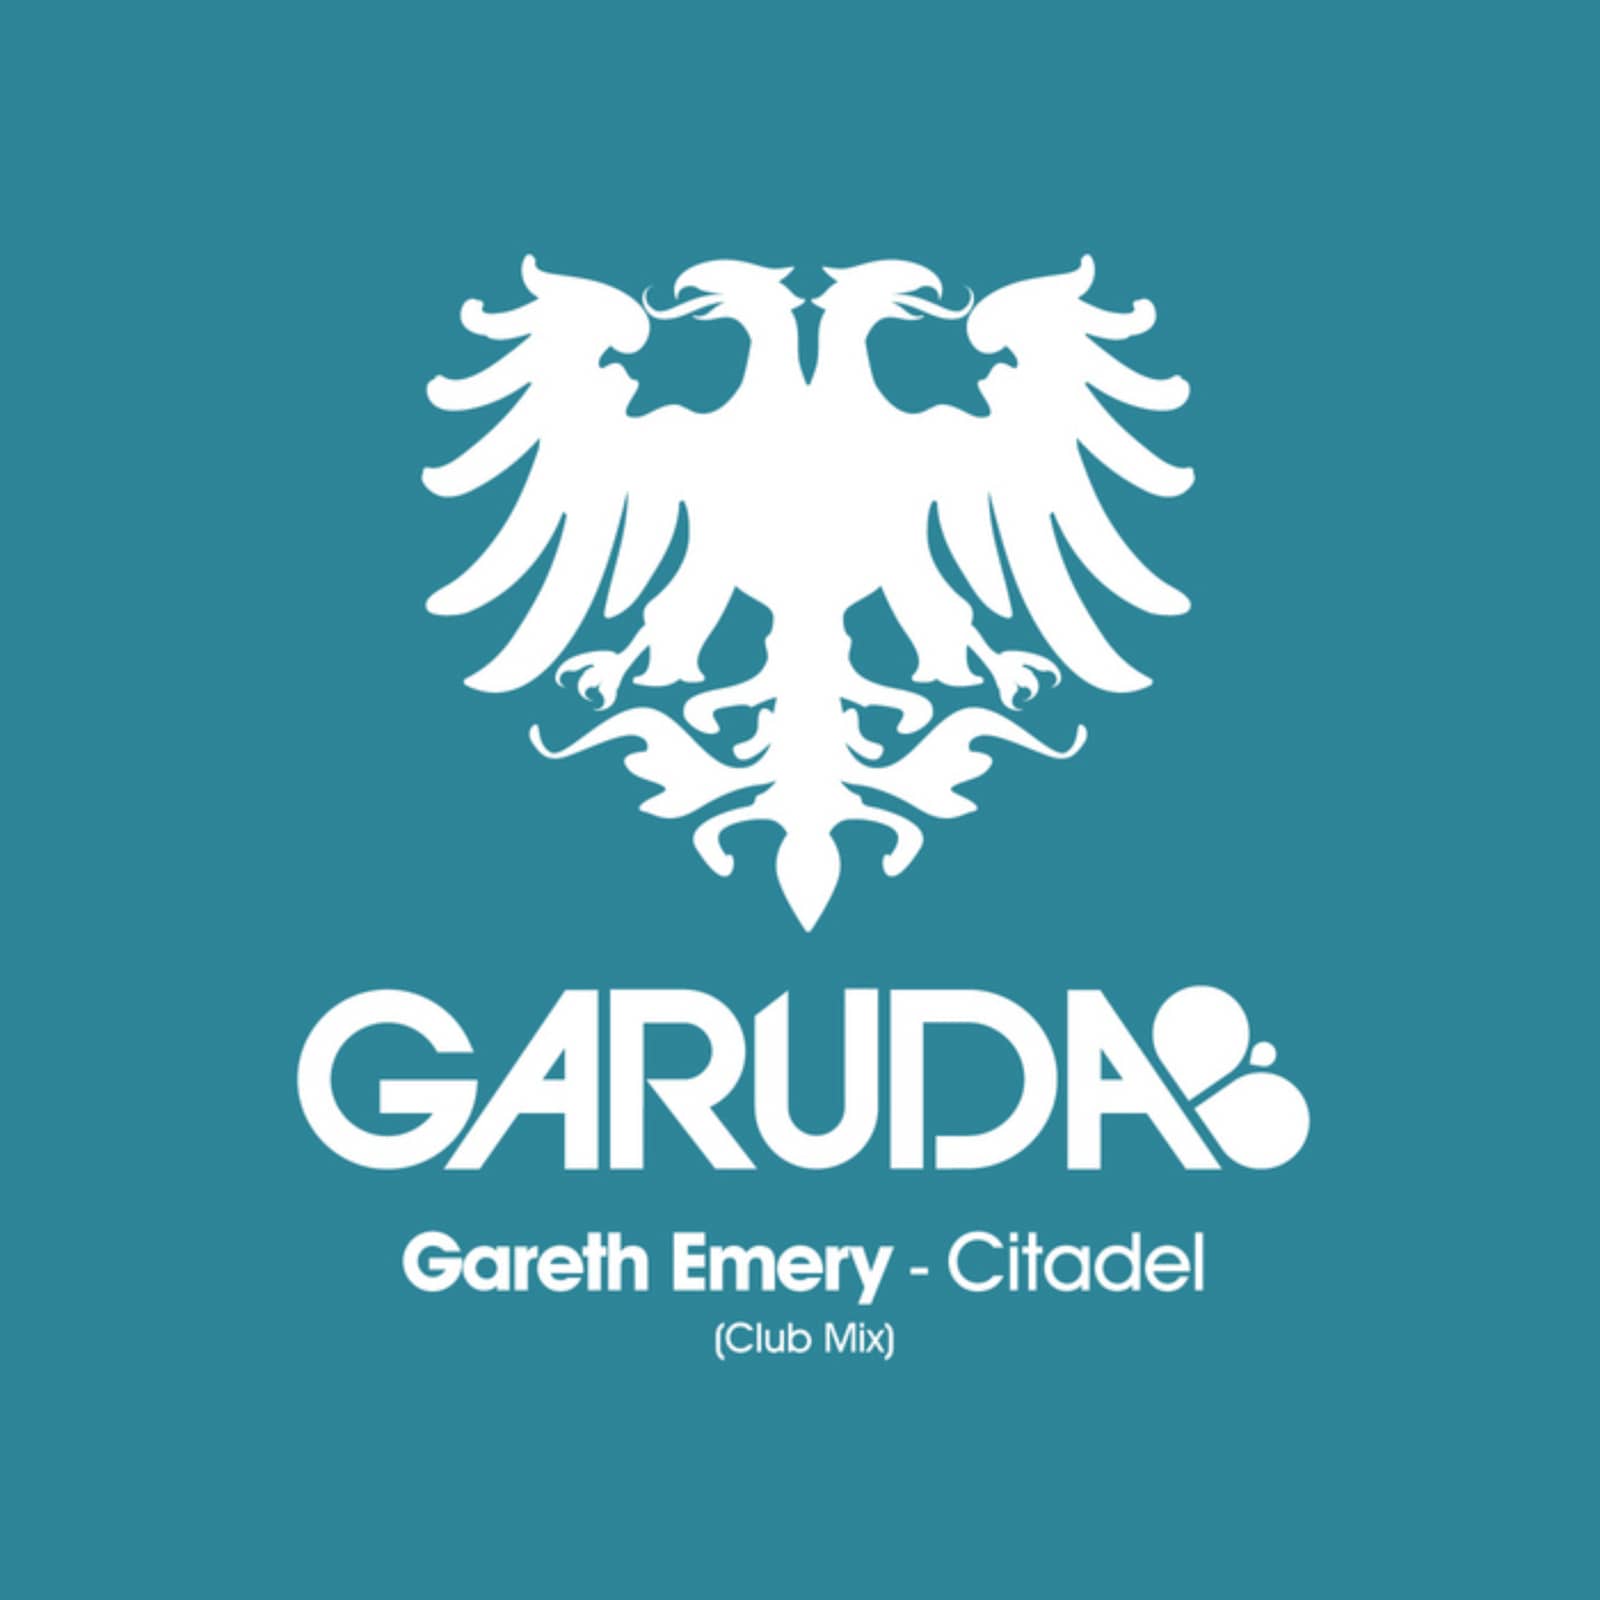 Ben gold. Gareth Emery - Citadel. Armada Ben Gold. Gareth Emery logo. Бен Голд в картинках.